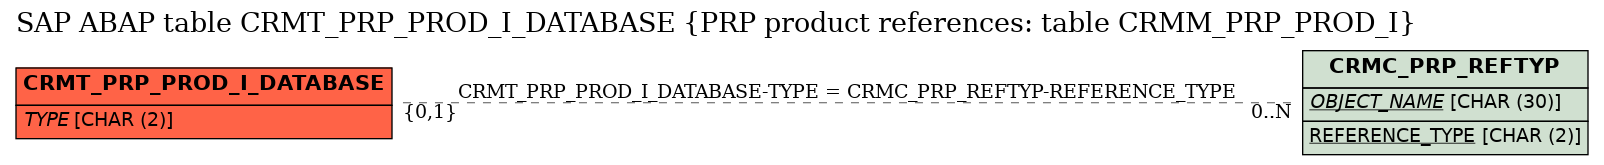 E-R Diagram for table CRMT_PRP_PROD_I_DATABASE (PRP product references: table CRMM_PRP_PROD_I)